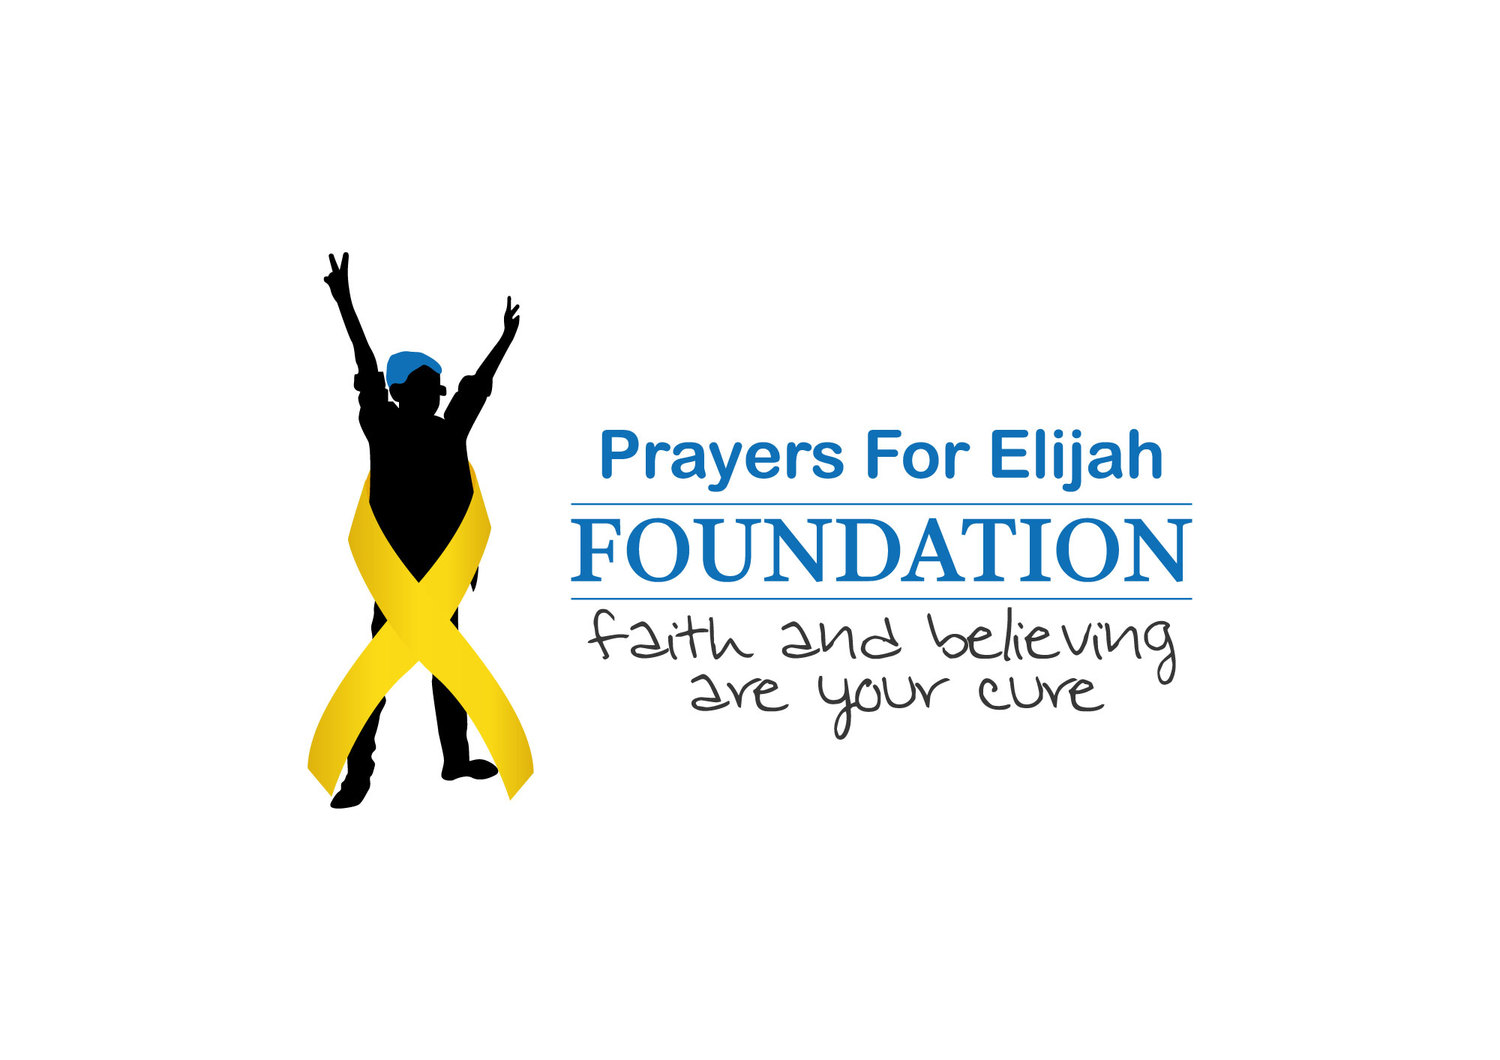 Prayers for Elijah Foundation